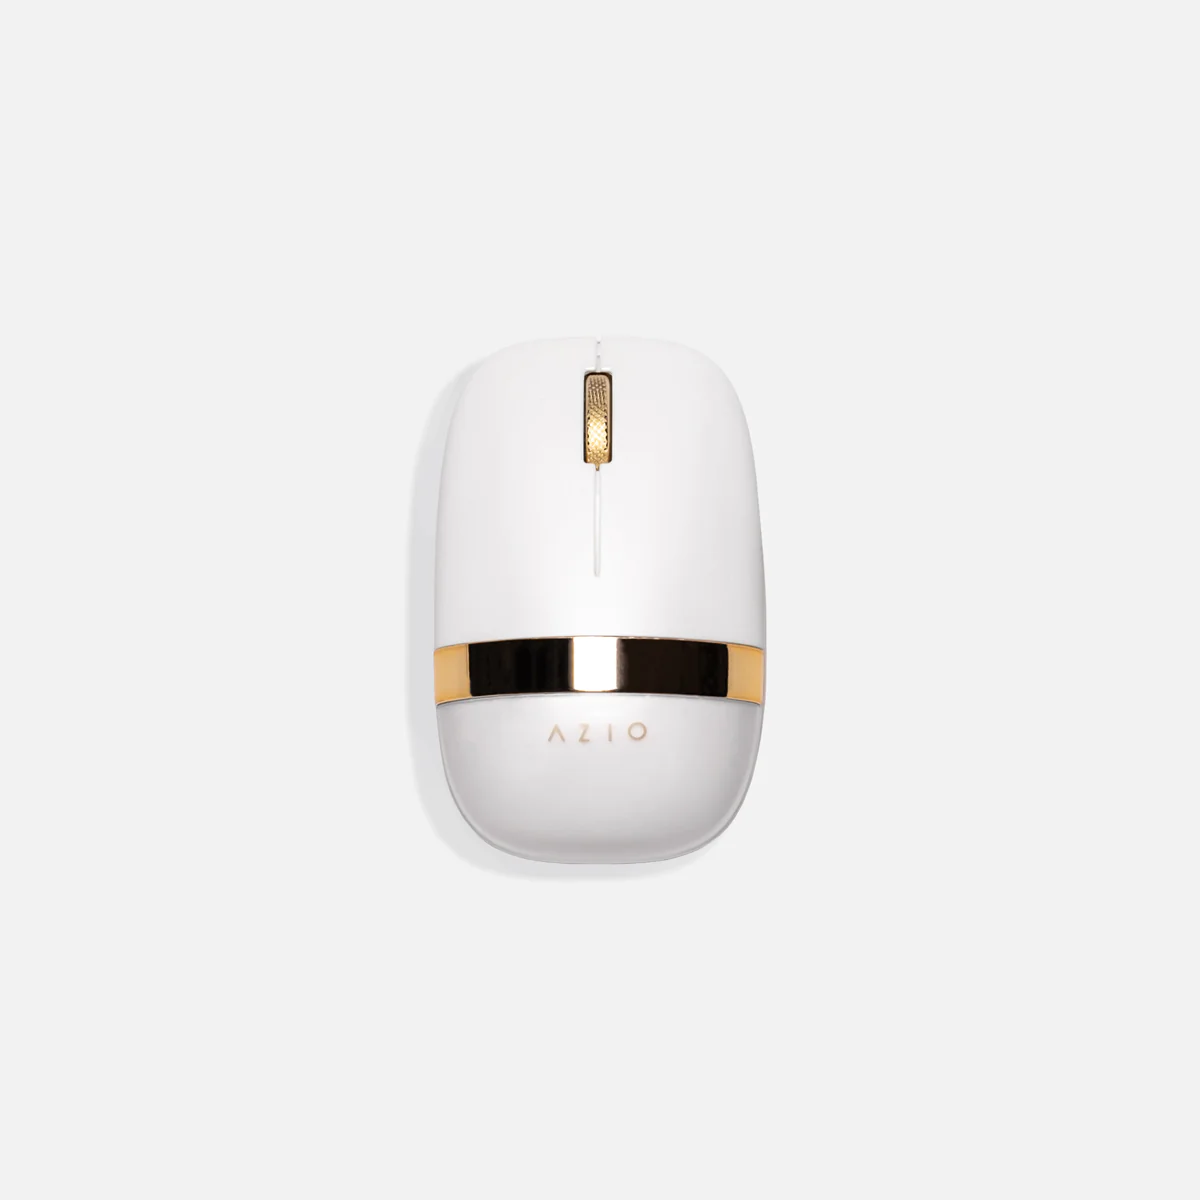 IZO Wireless Mouse